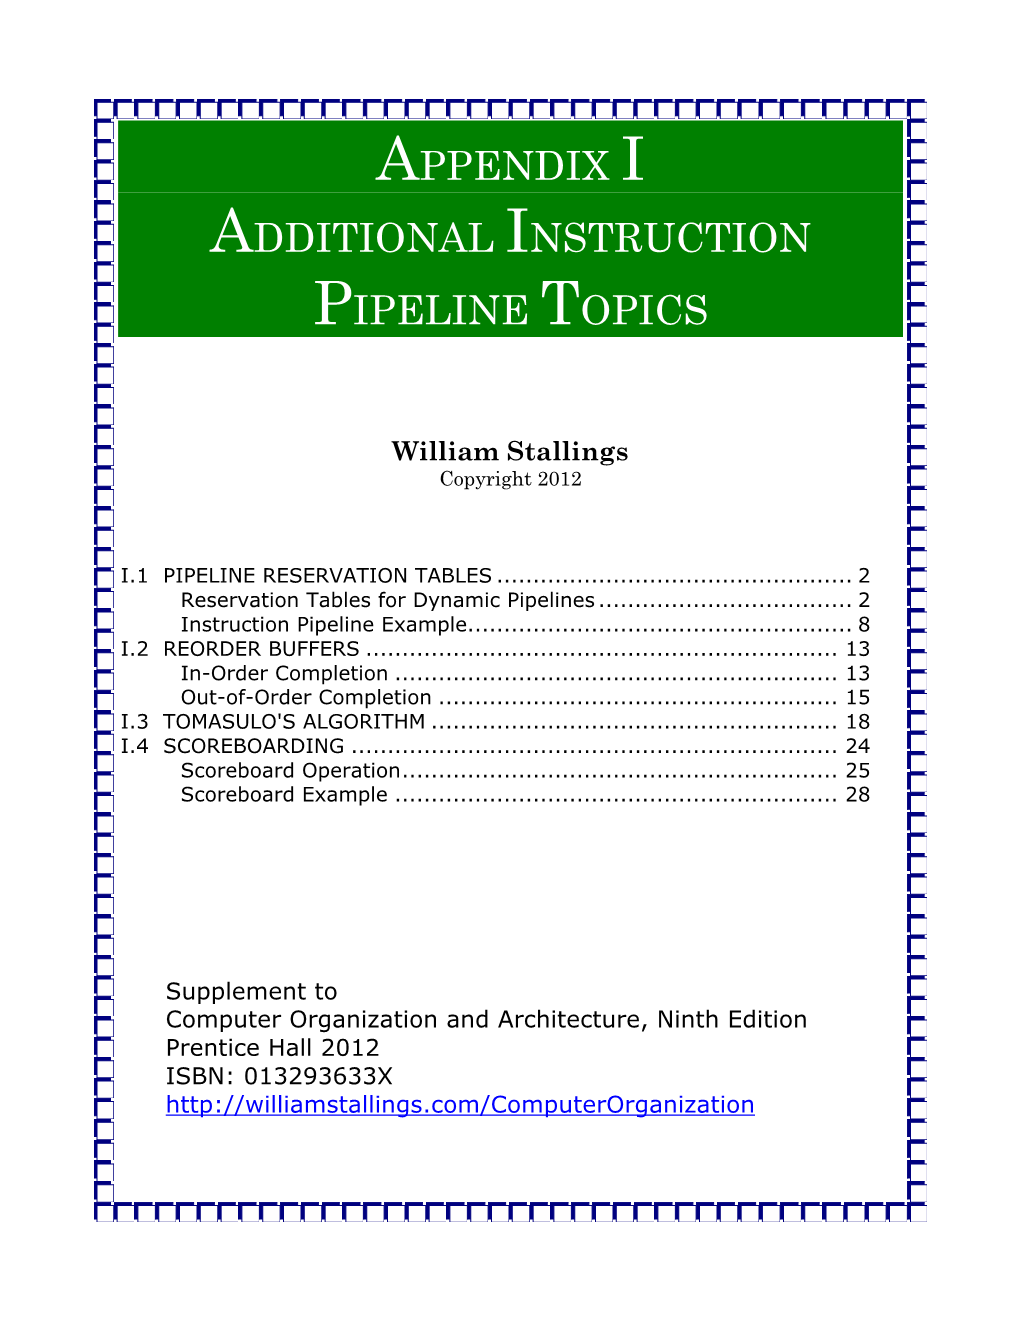 Appendix I Additional Instruction Pipeline Topics